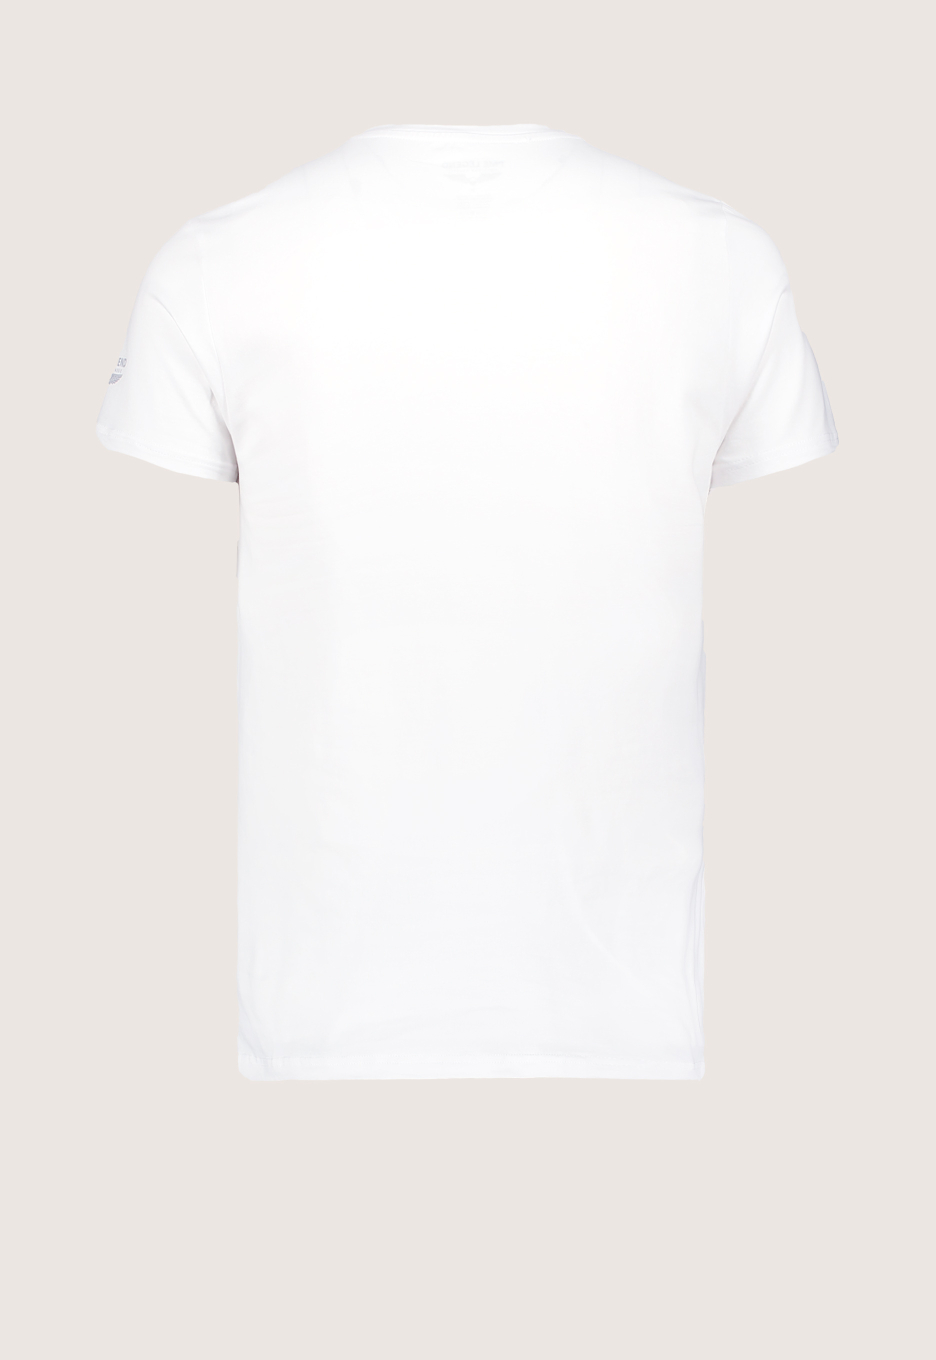 The Louisville Slugger Number 32 Pittsburgh Clothing Company T-Shirt -  Masteez